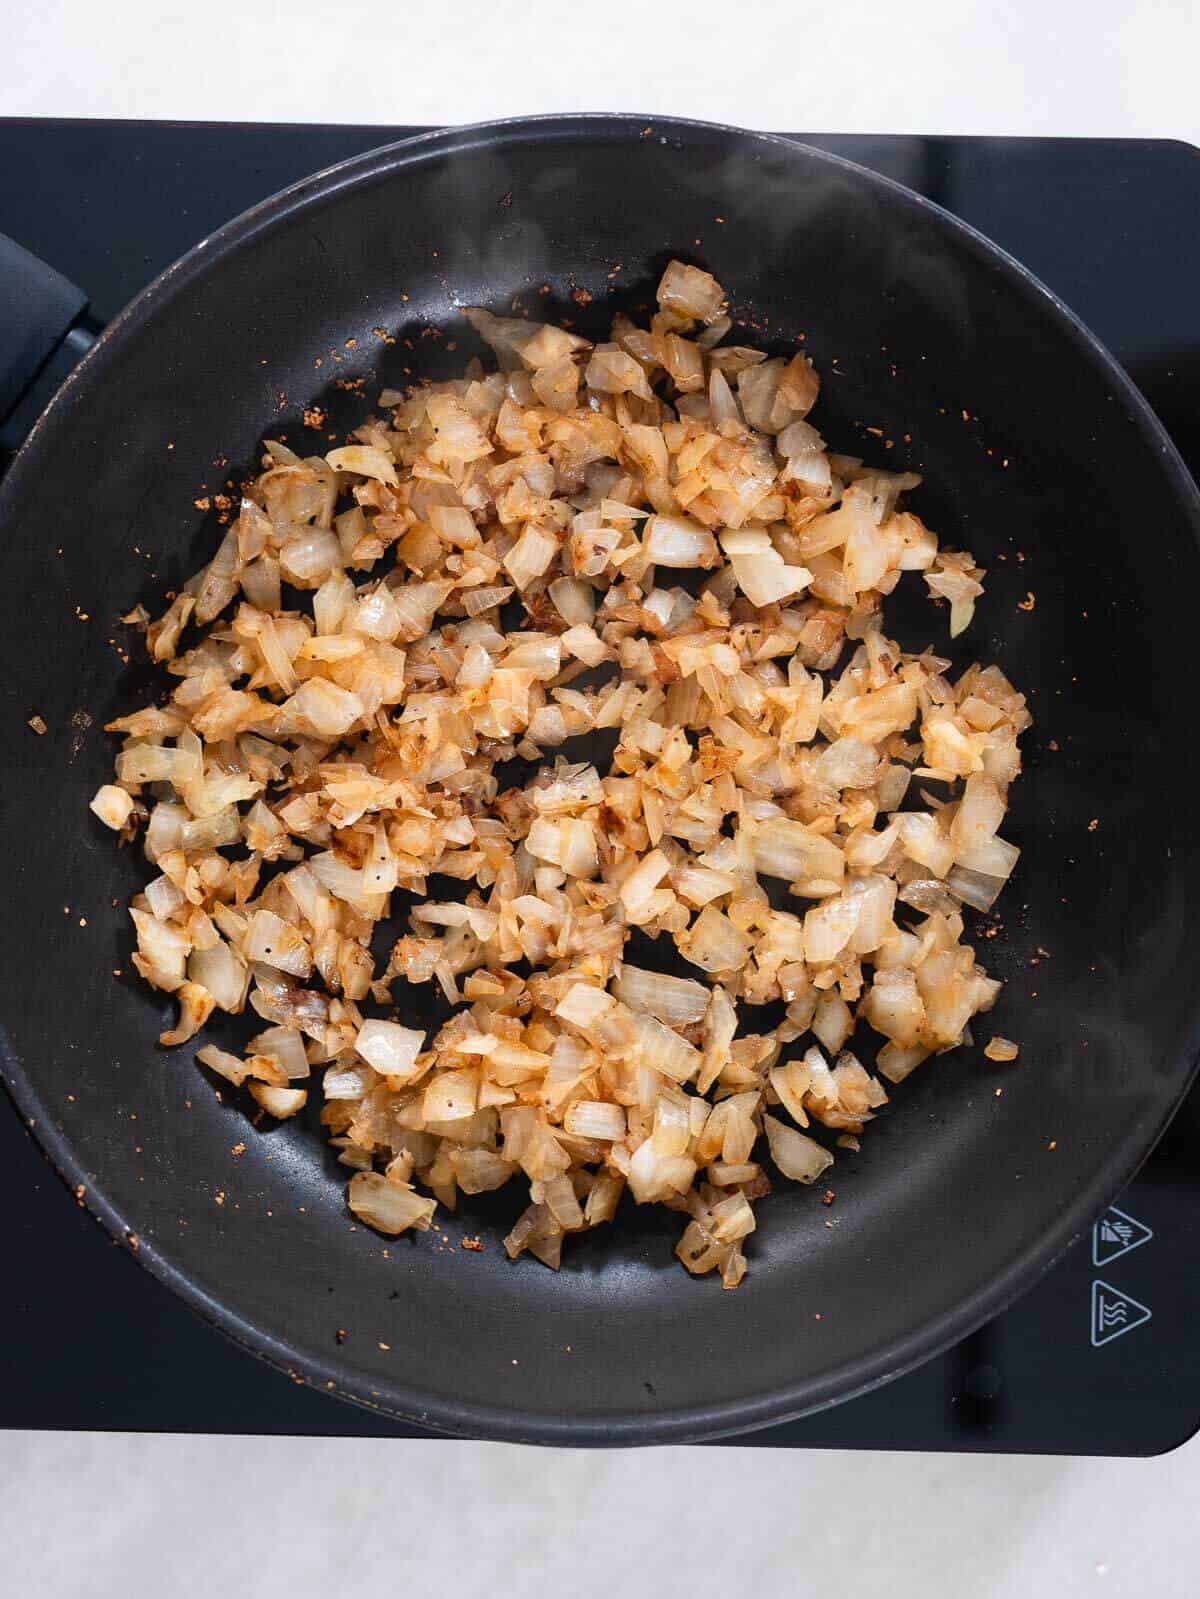 stir-frying onions in a skillet.